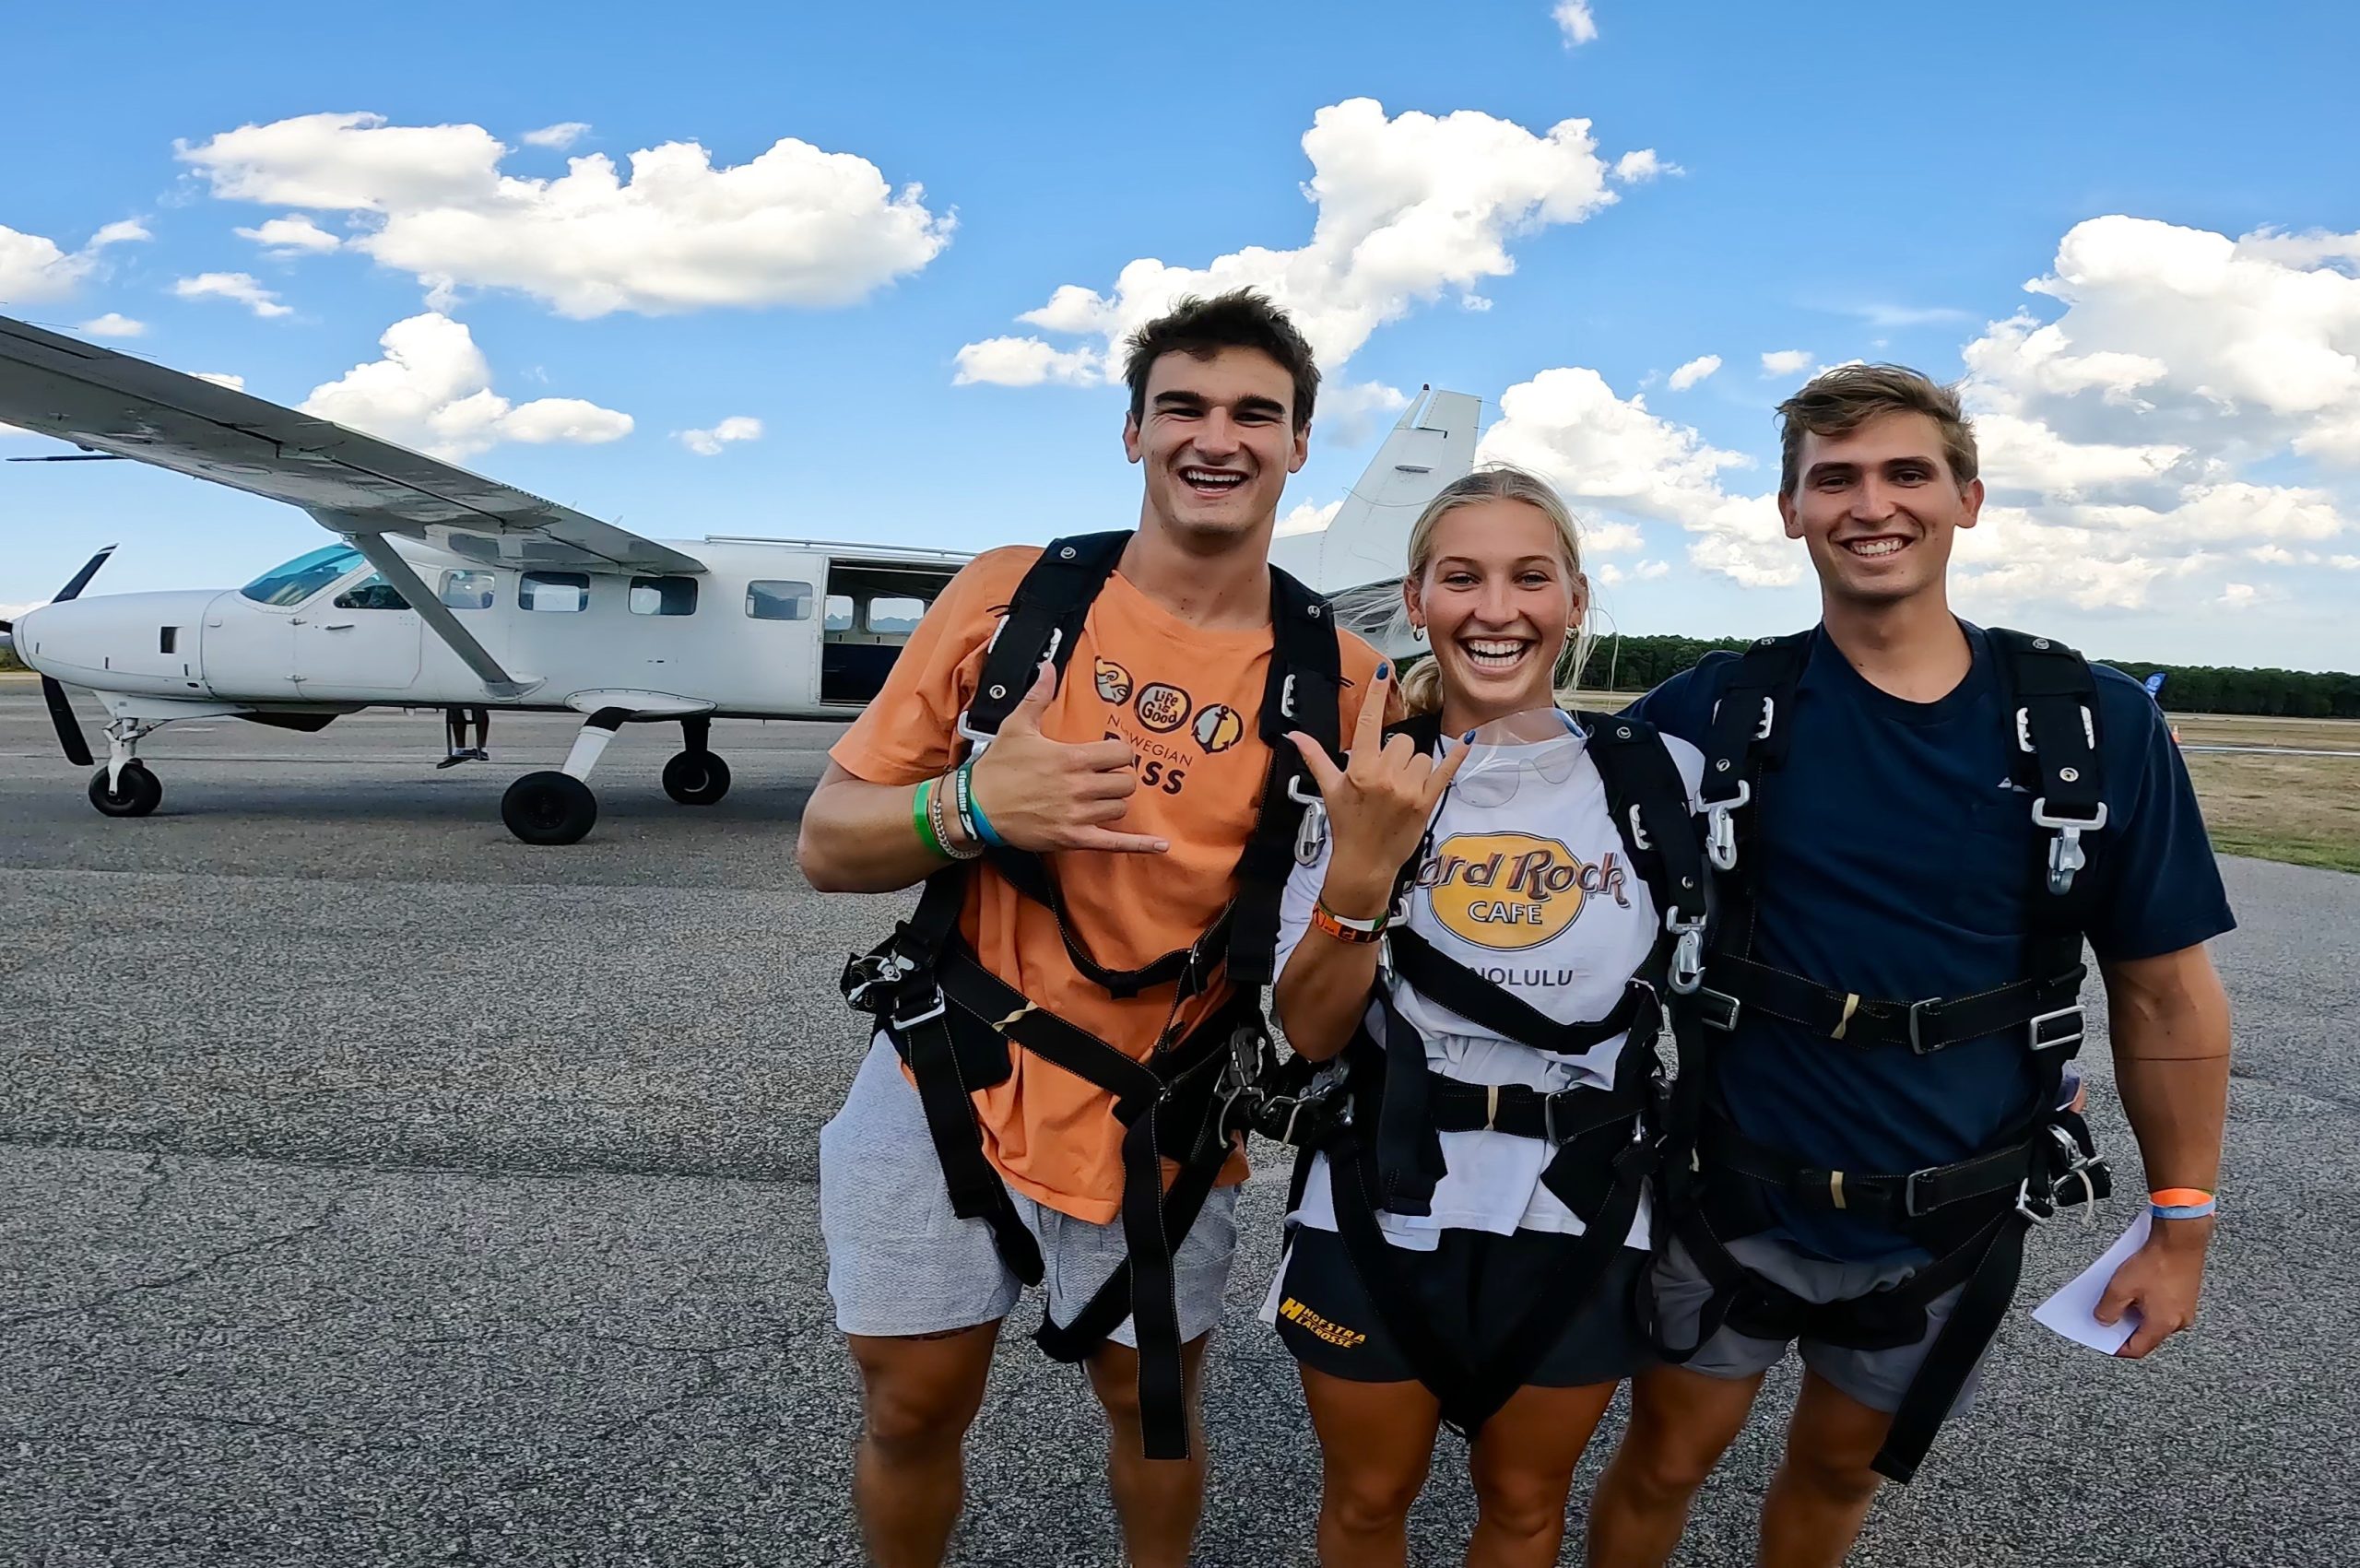 Three excited people looking forward to skydiving.